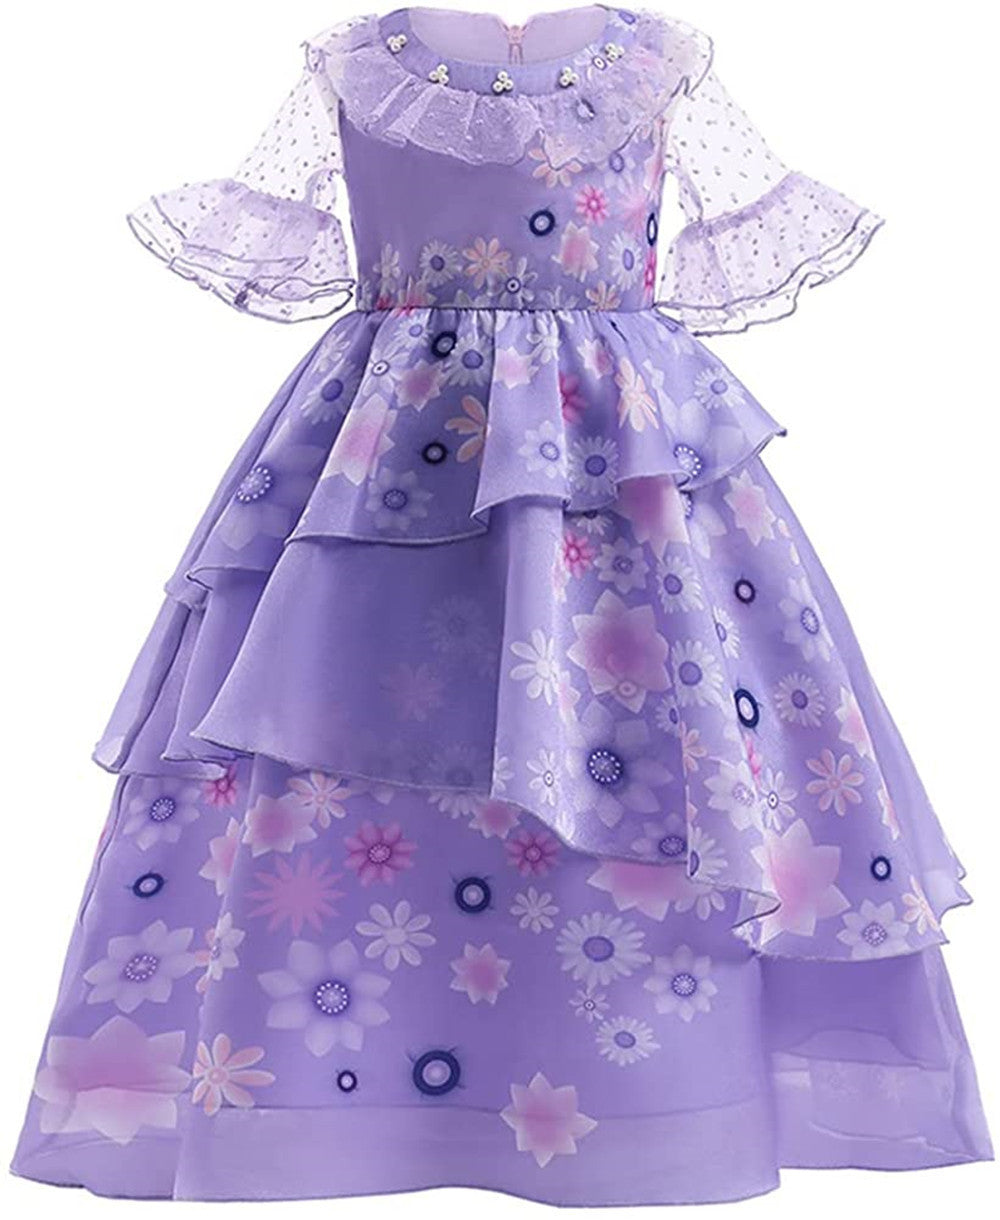 Magic Full House Series Purple Dress Fluffy Cute Skirt